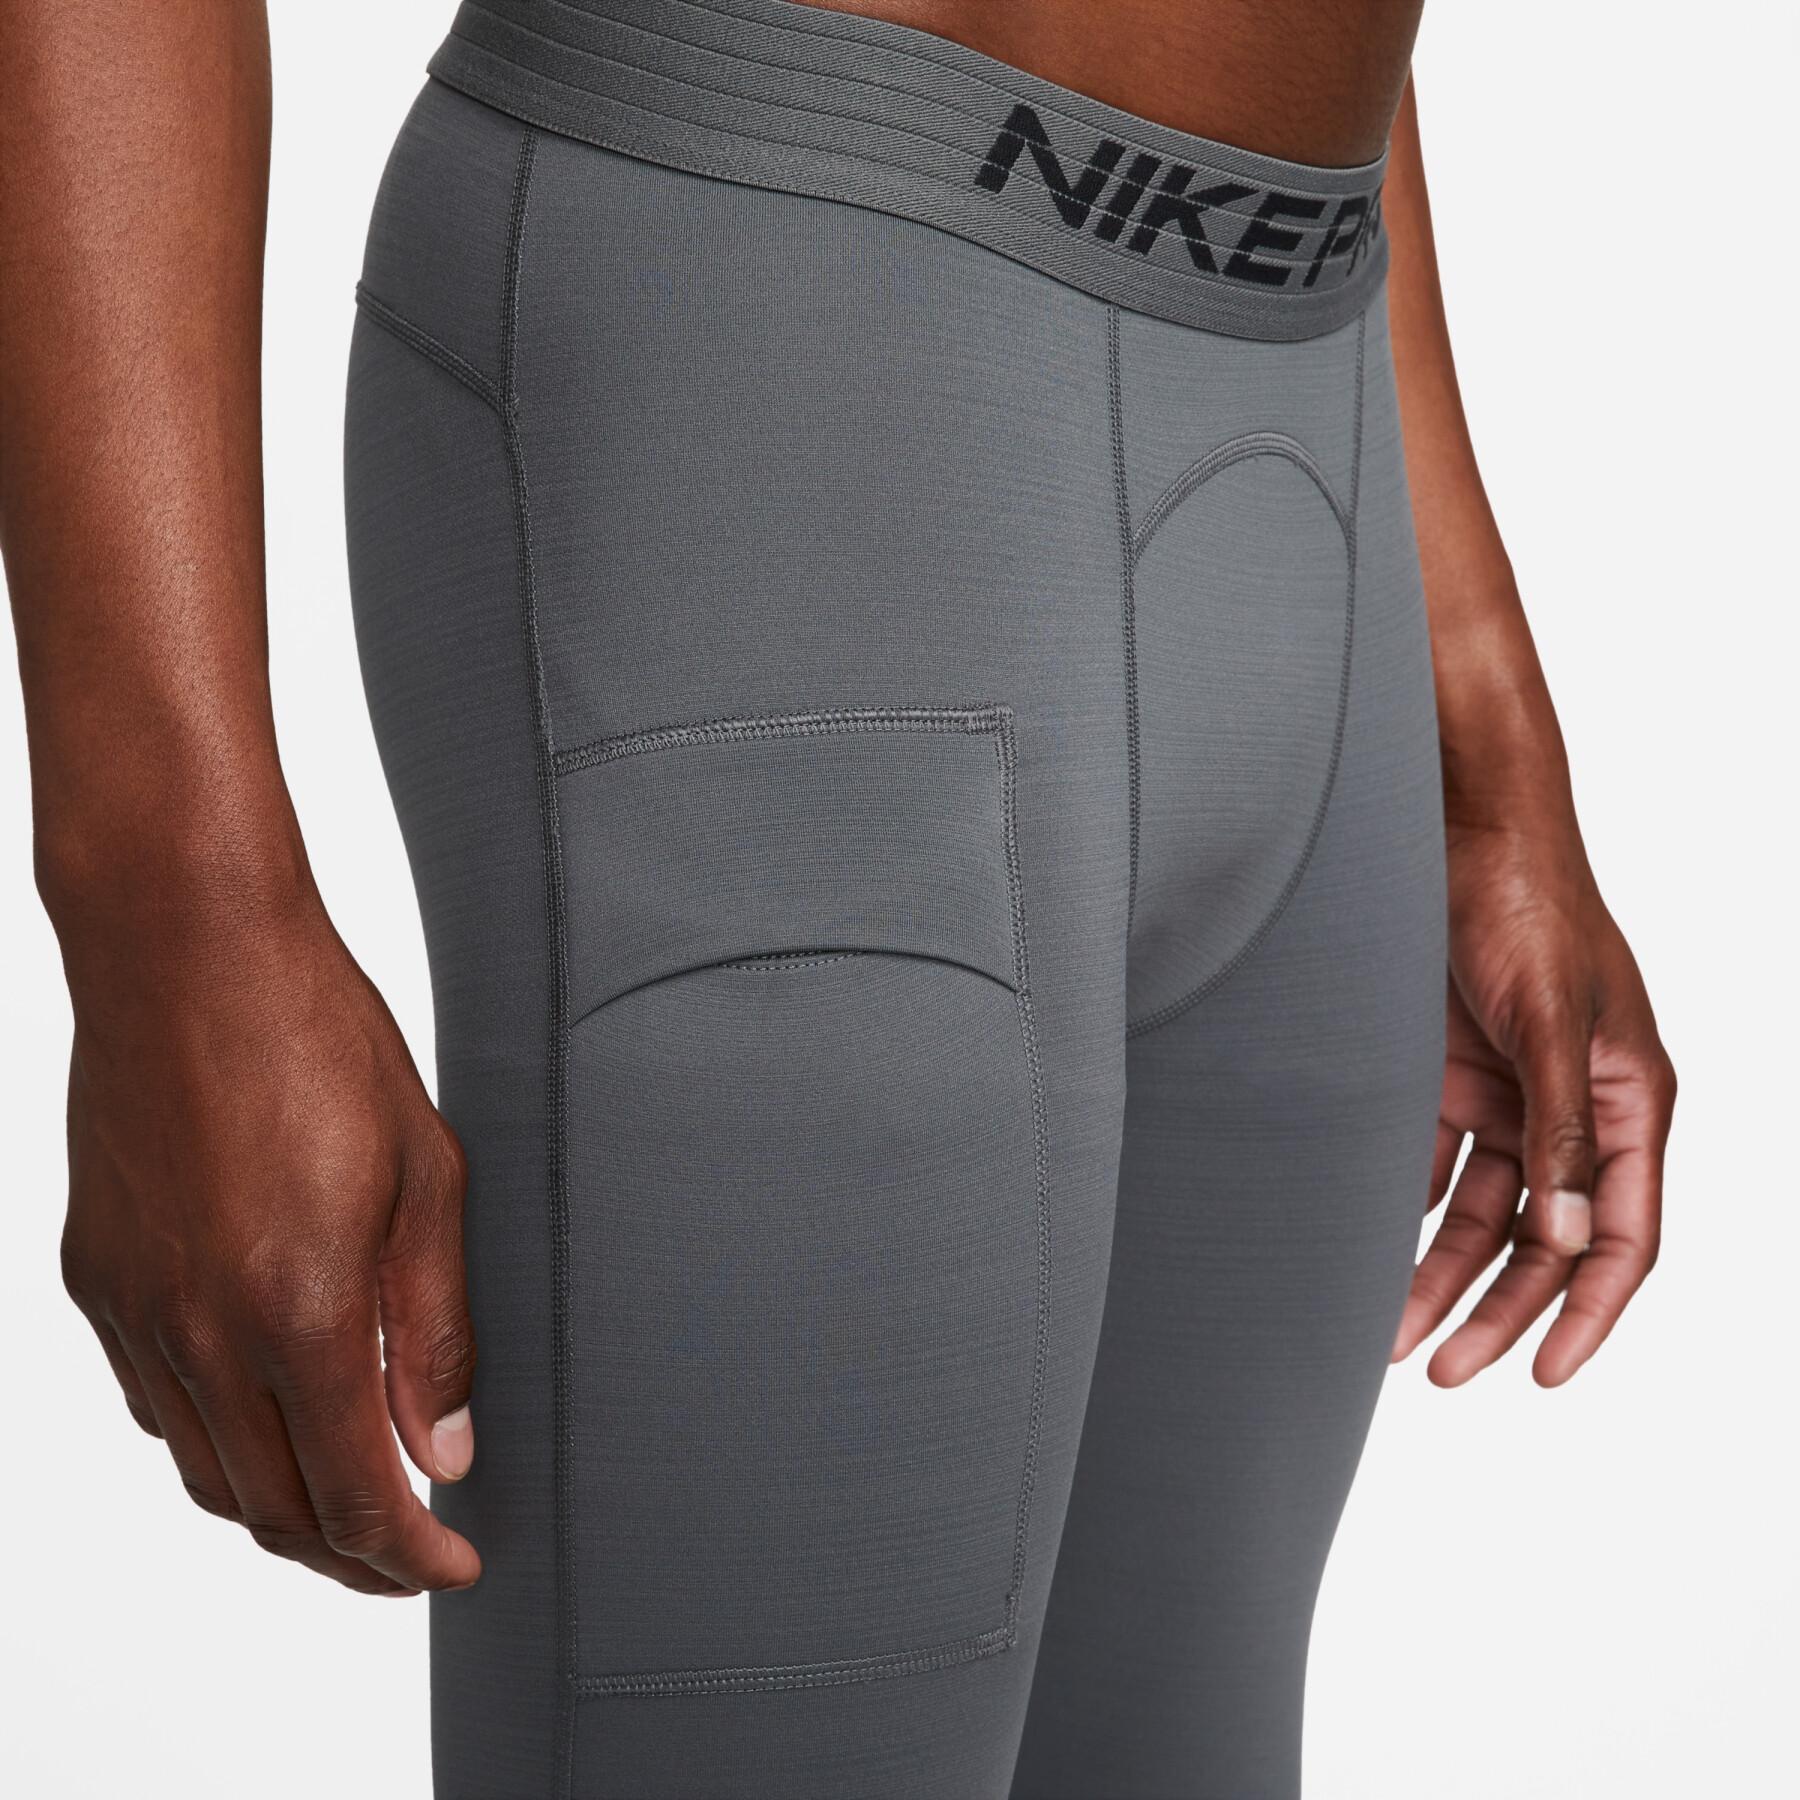 Leggings Nike NP Dri-FIT Warm